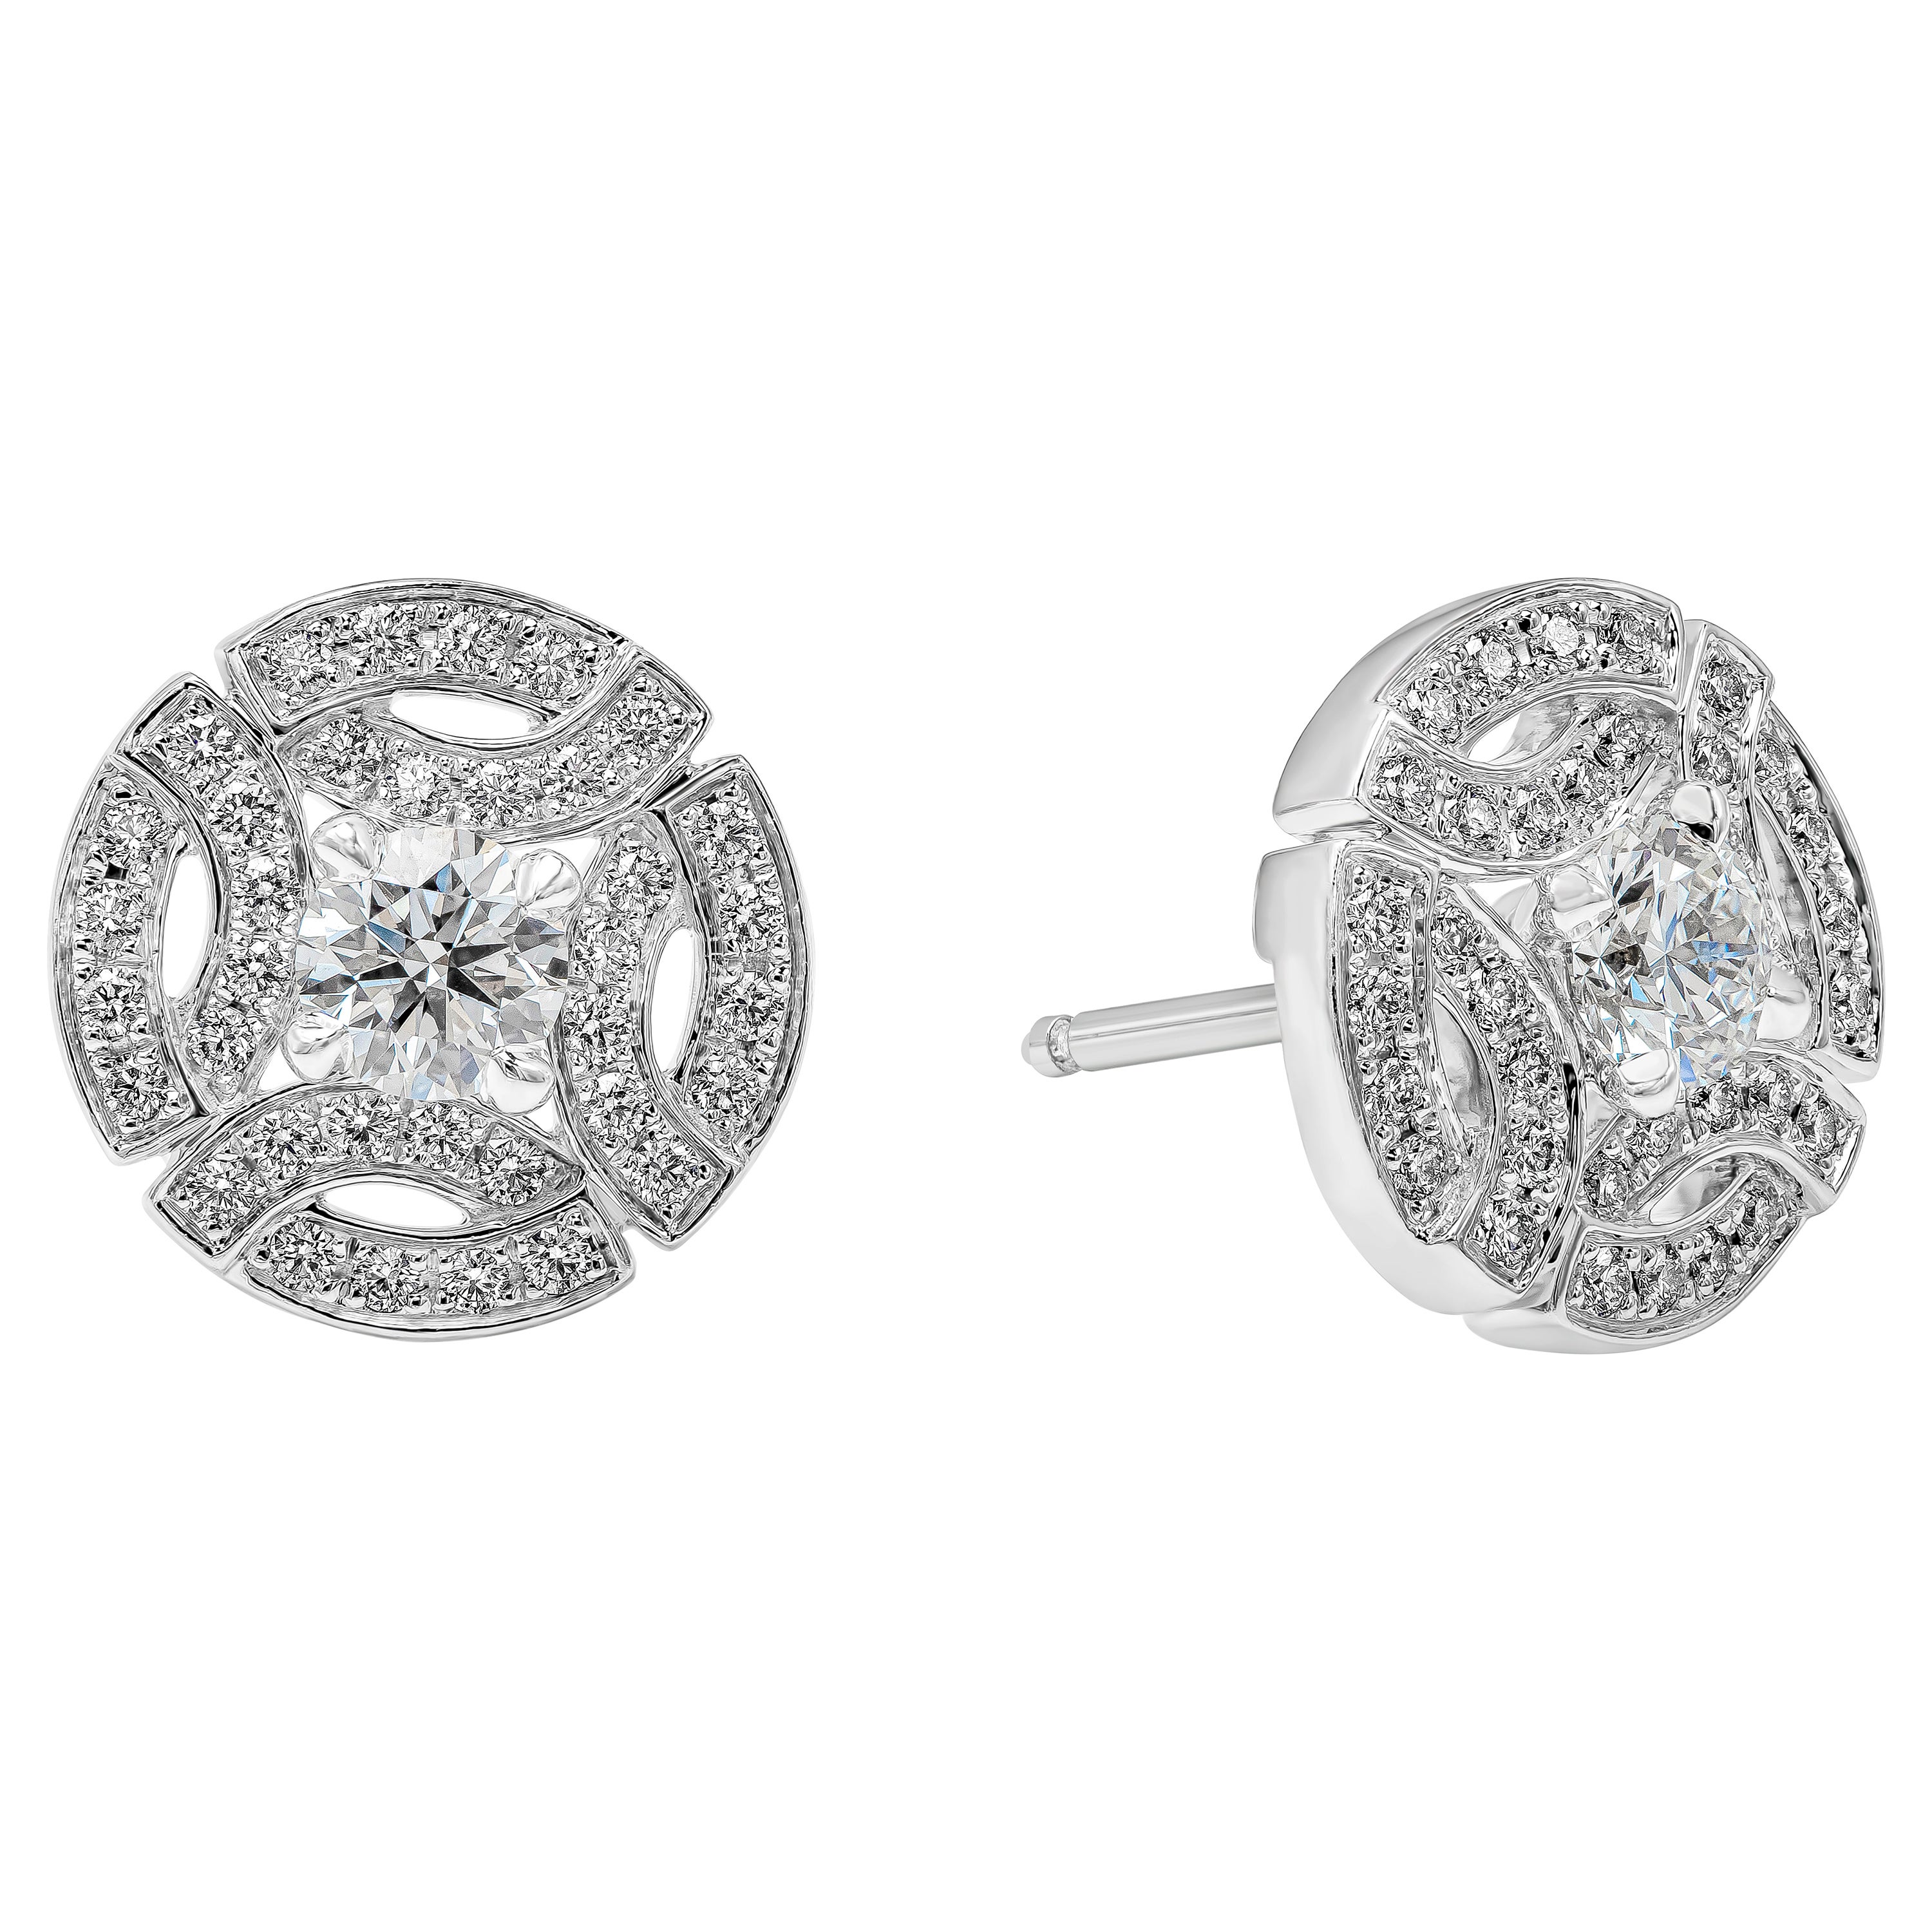 GIA Certified Round Diamond Galanterie de Cartier Stud Earrings